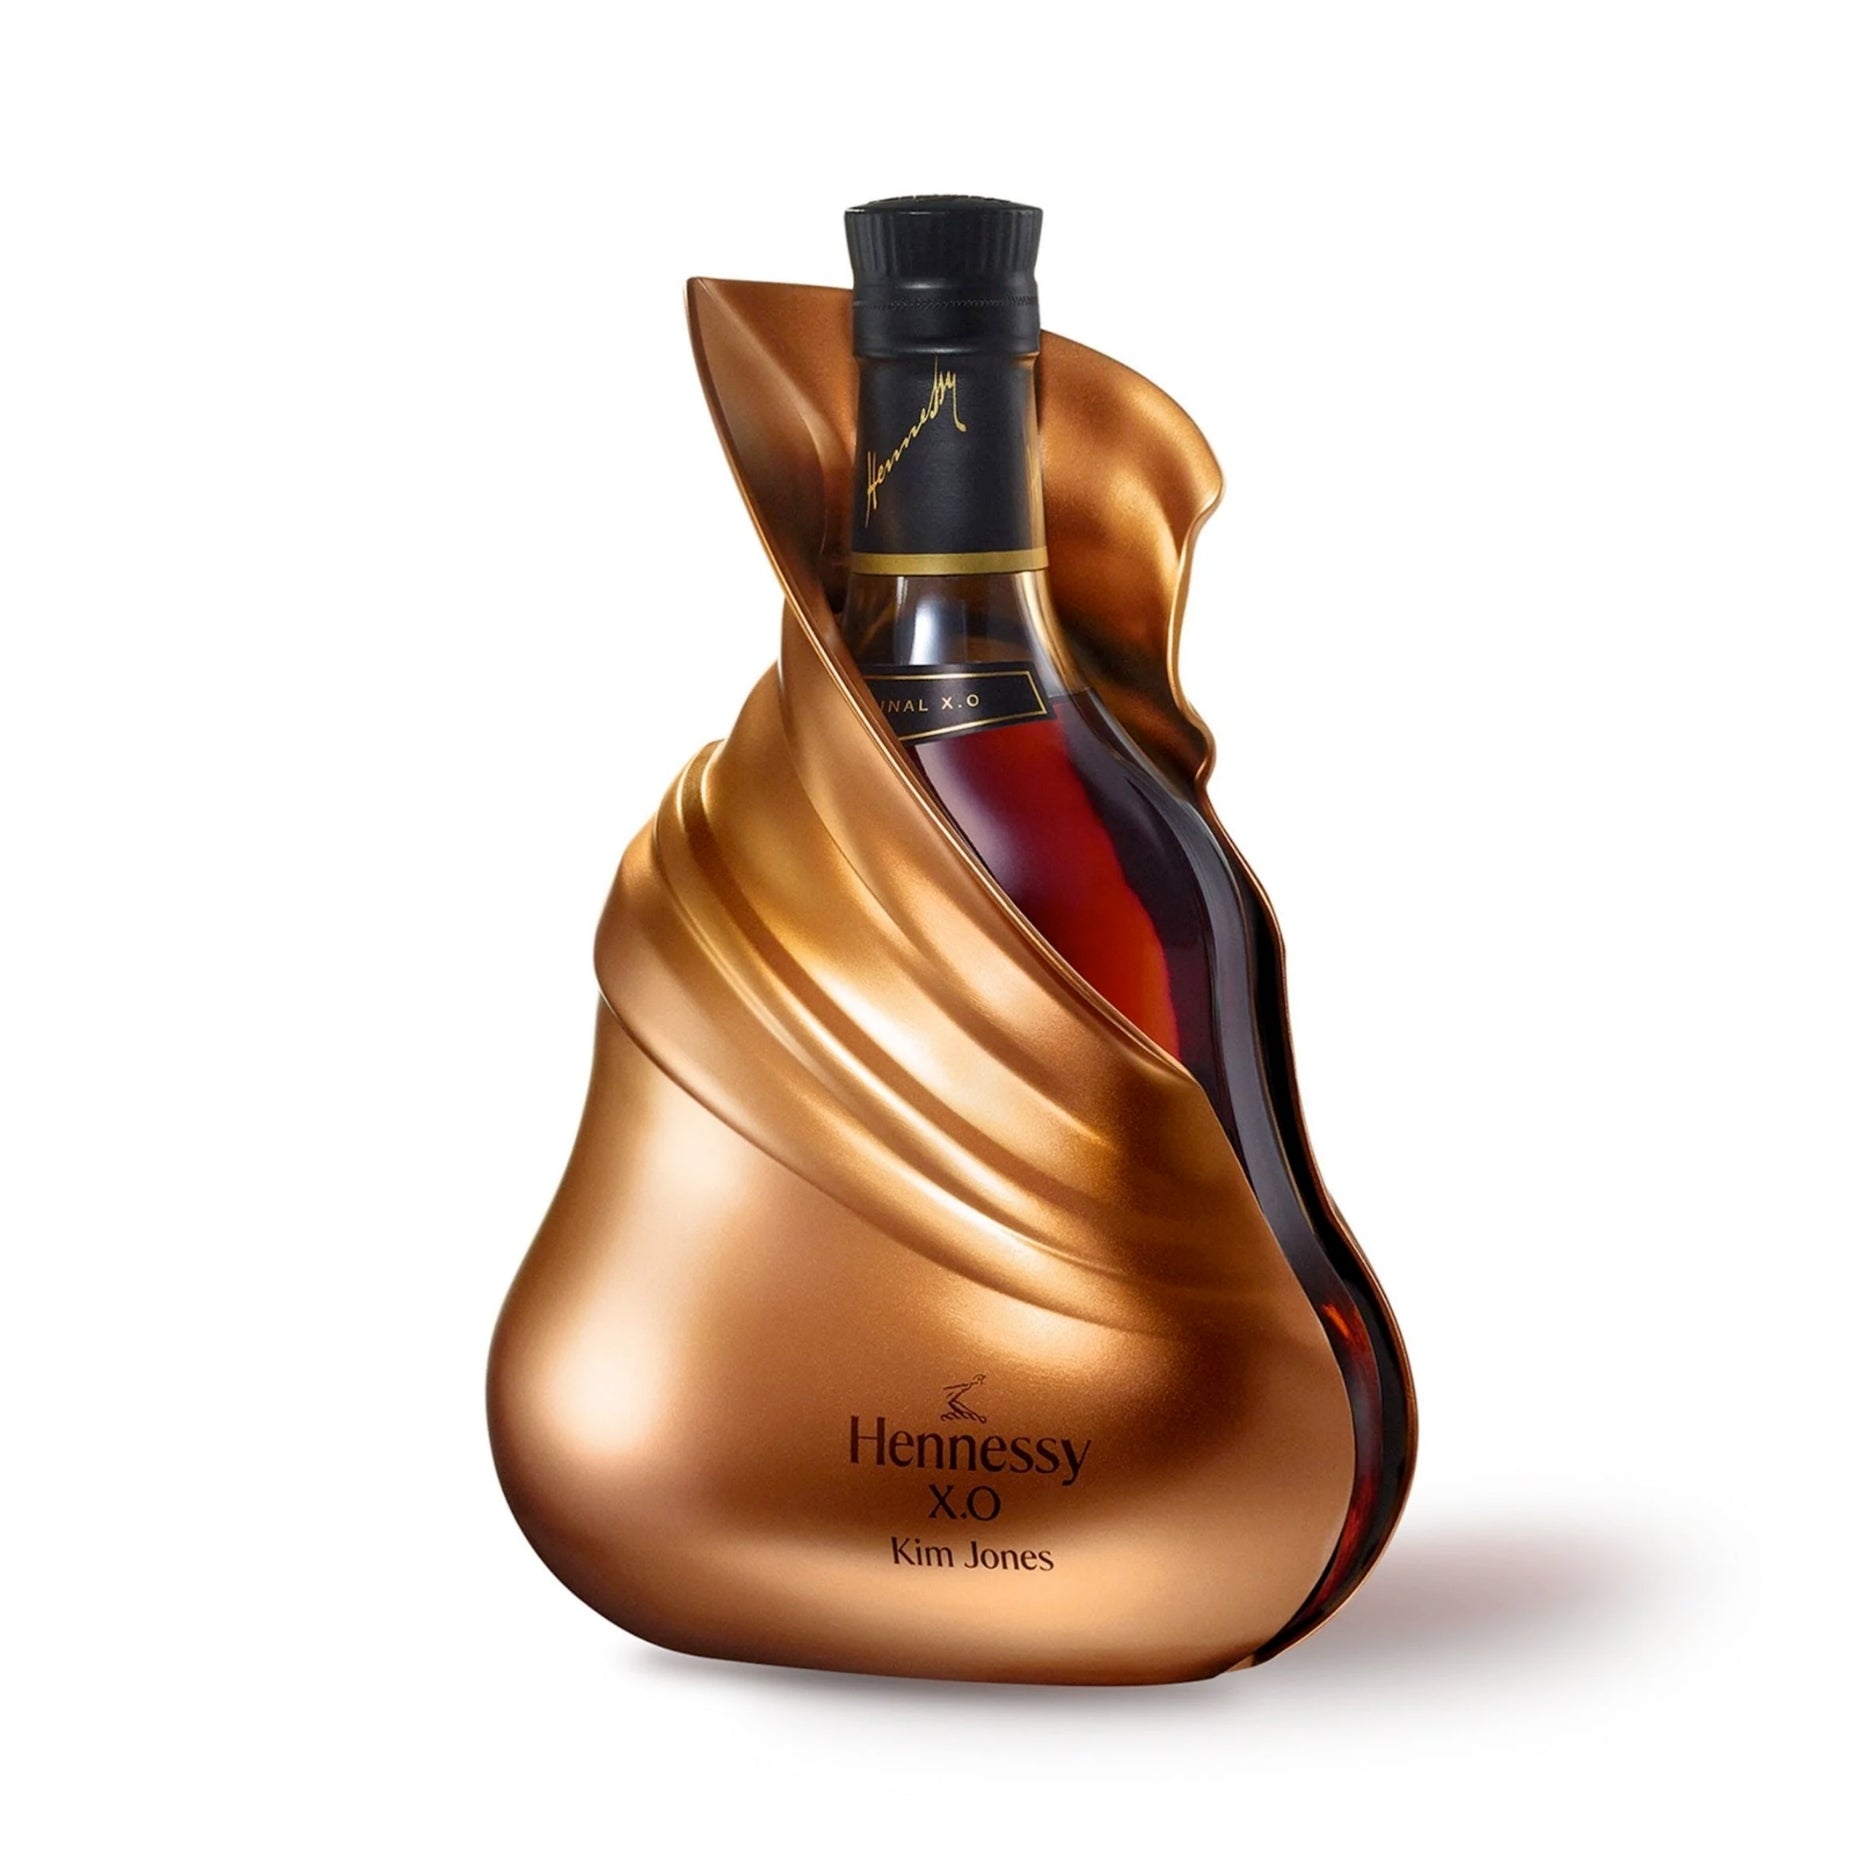 Hennessy X.O. Kim Jones Limited Edition Cognac